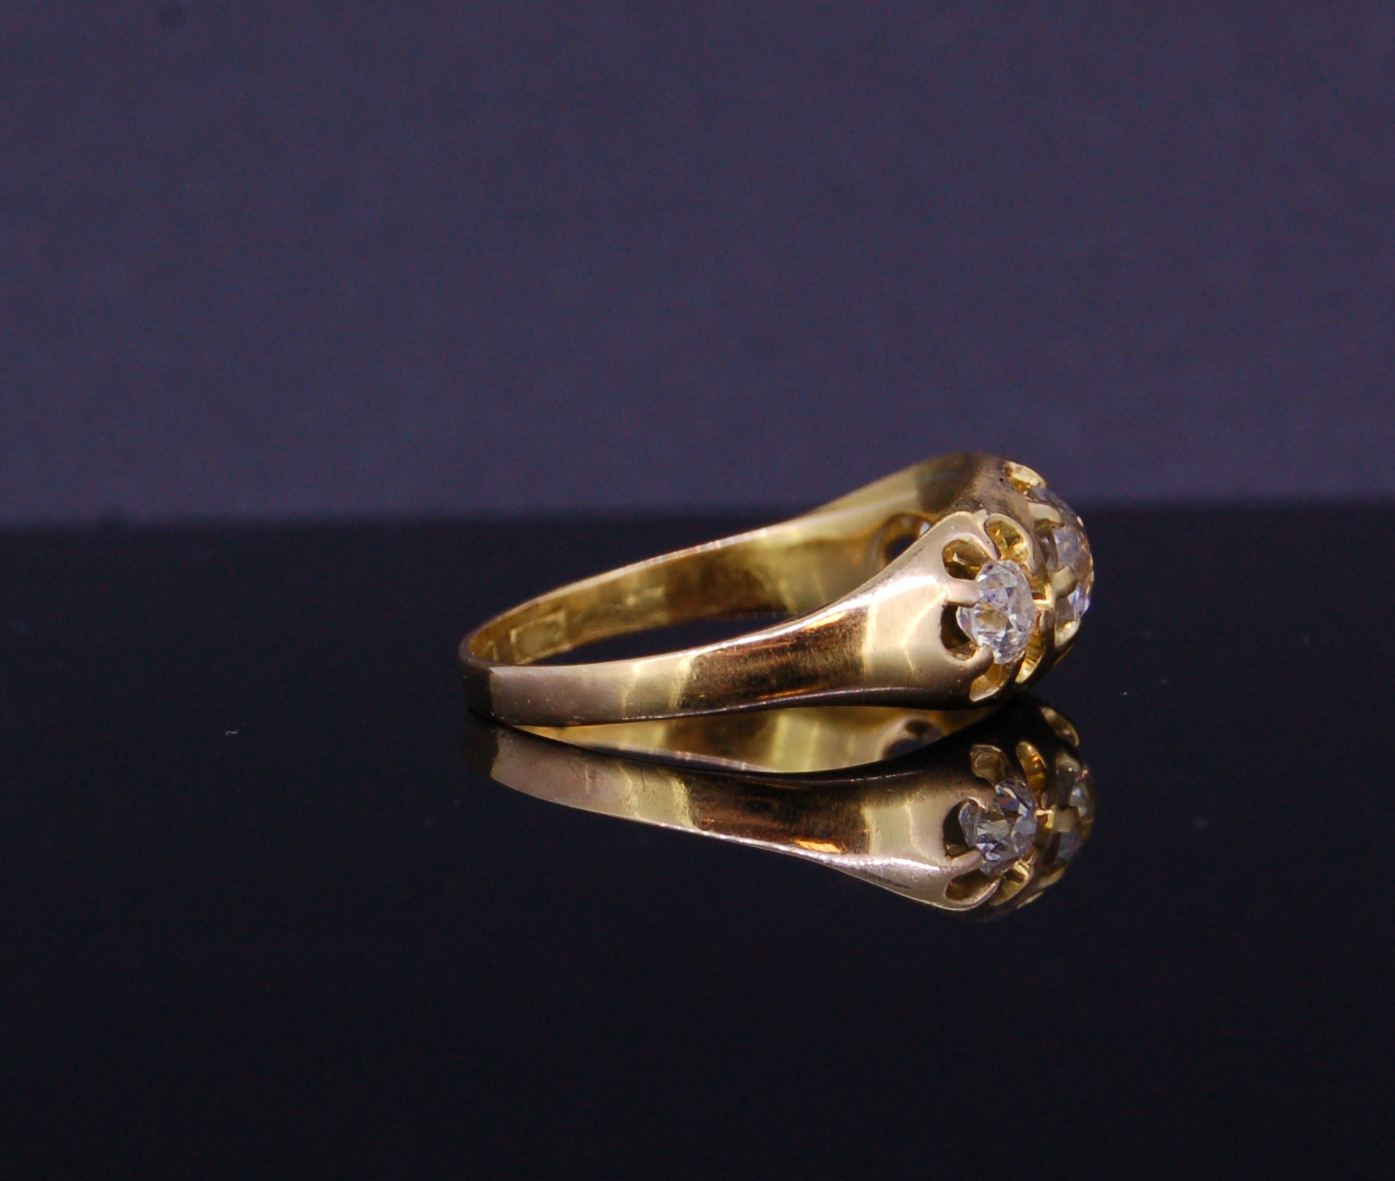 ANTIQUE 3-STONE DIAMOND RING - Image 2 of 2